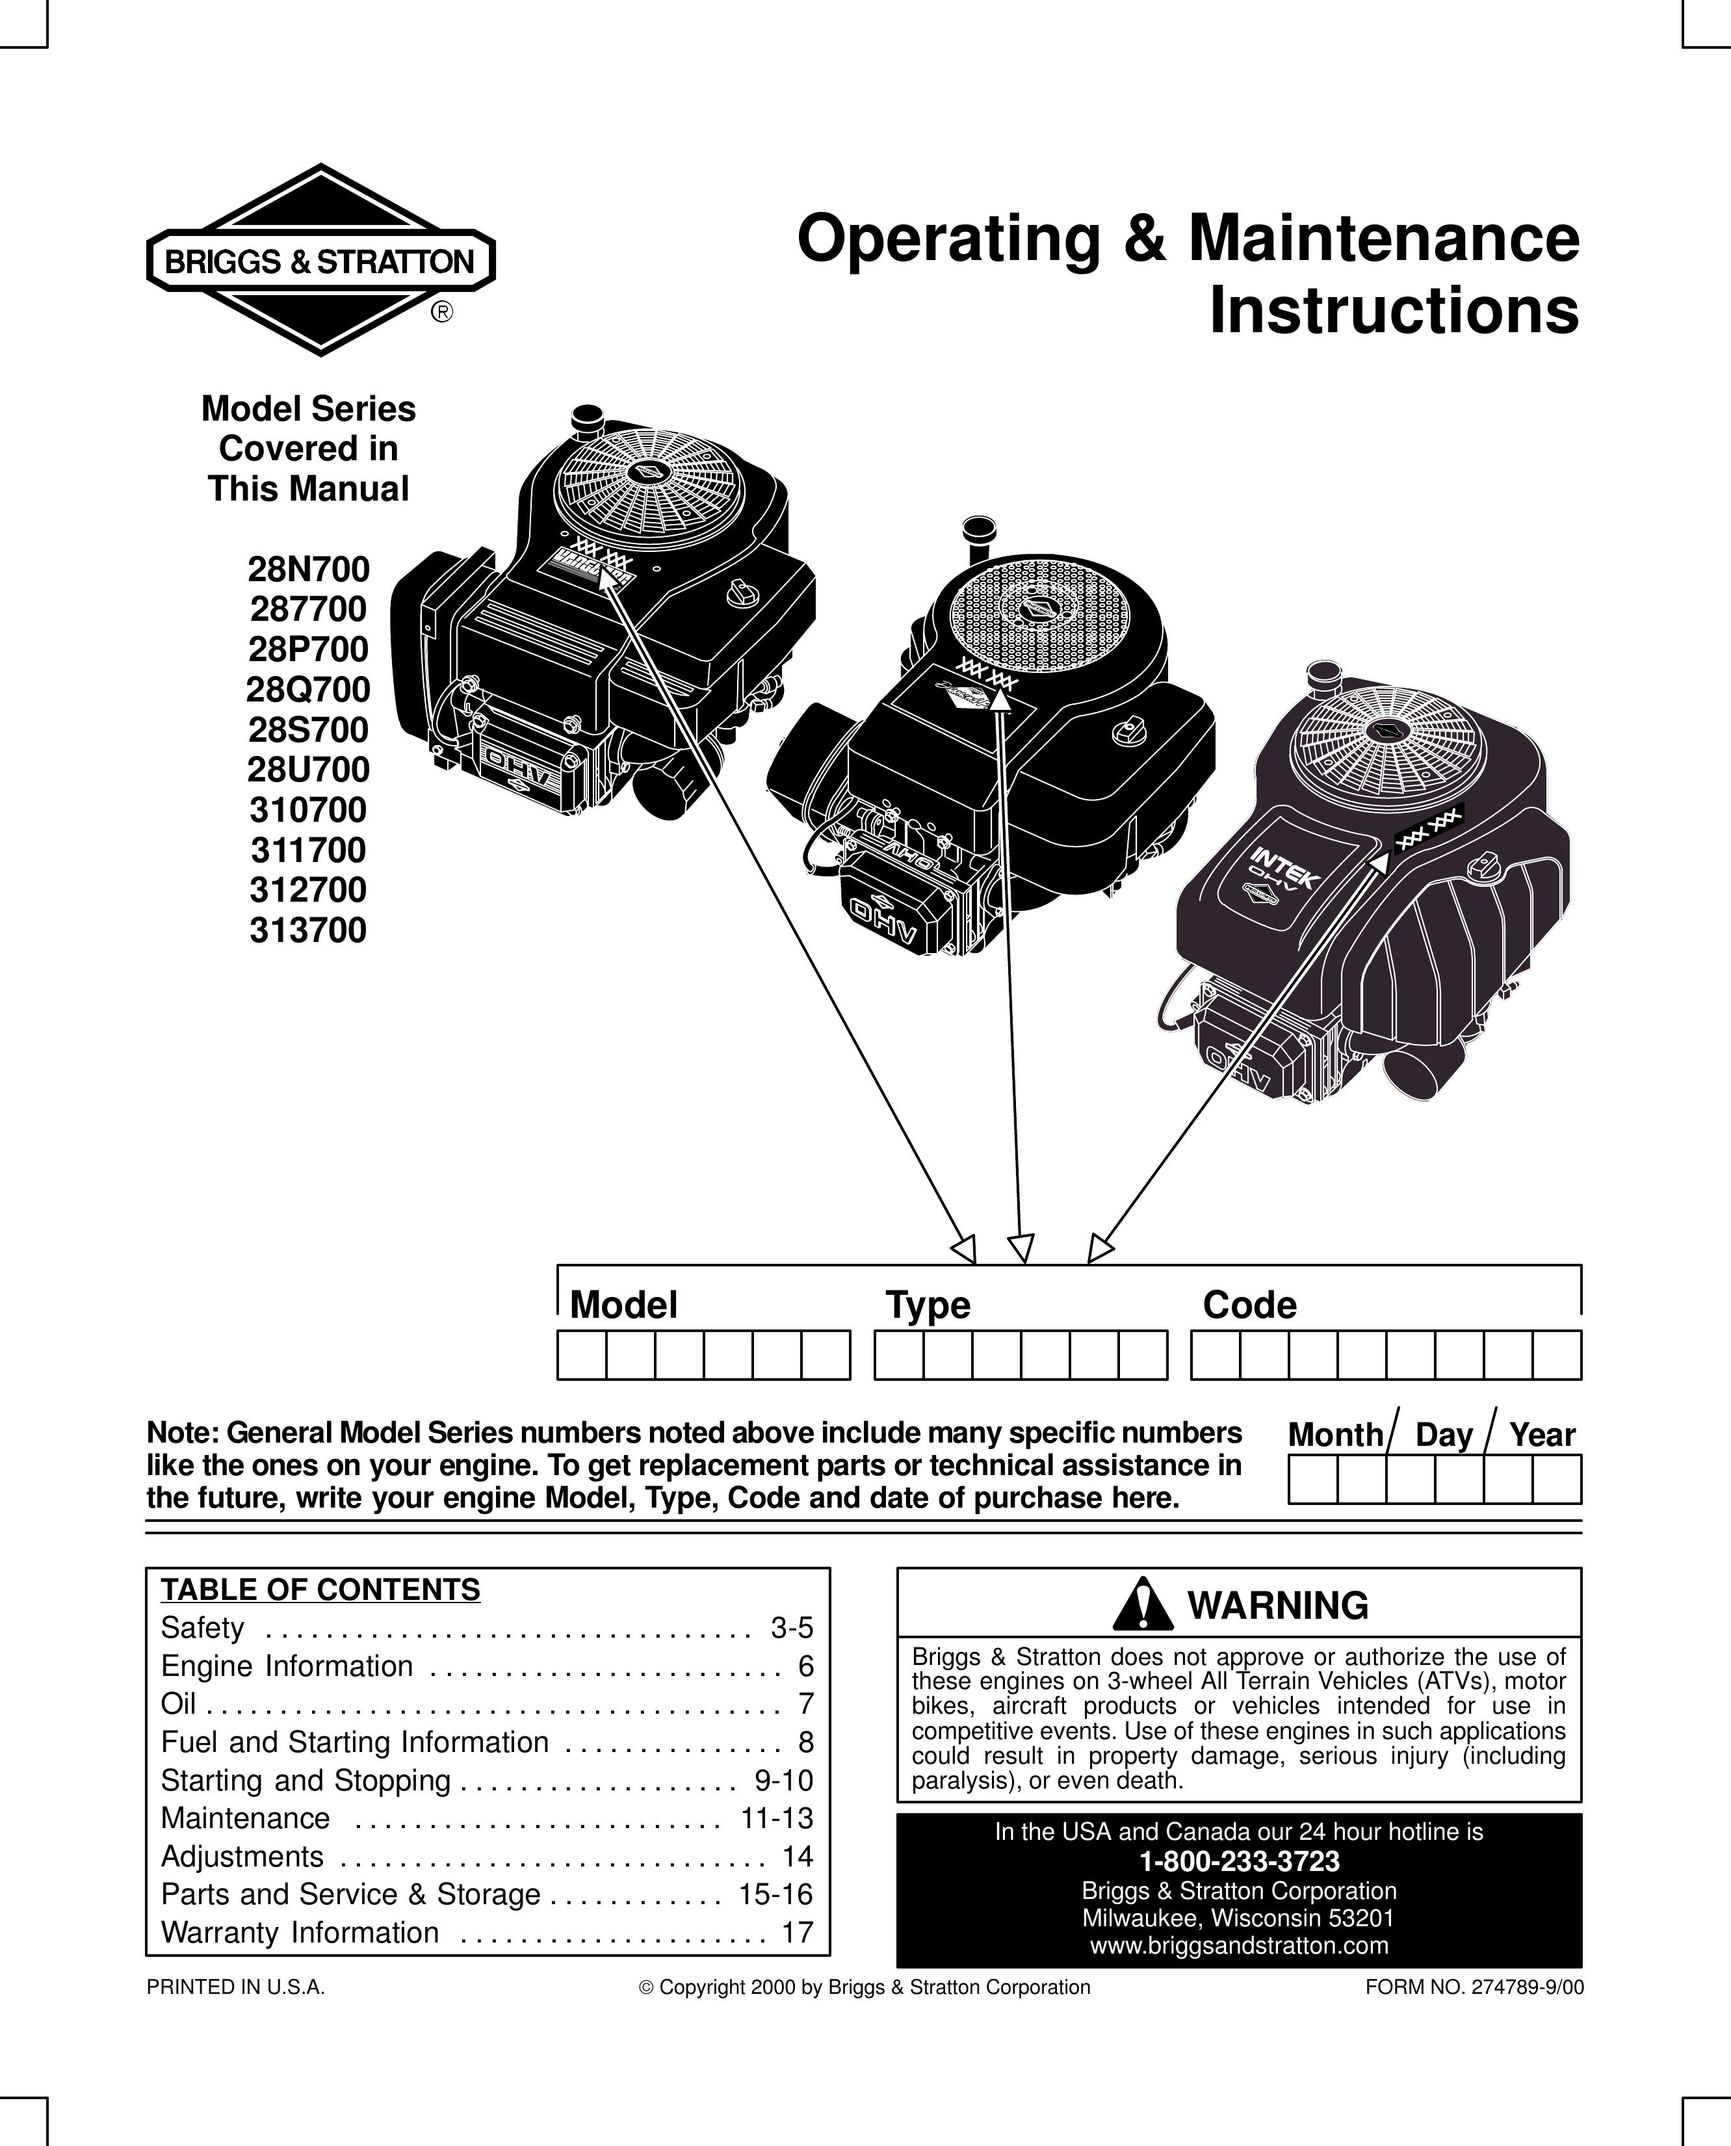 Briggs & Stratton 28N700 Air Cleaner User Manual